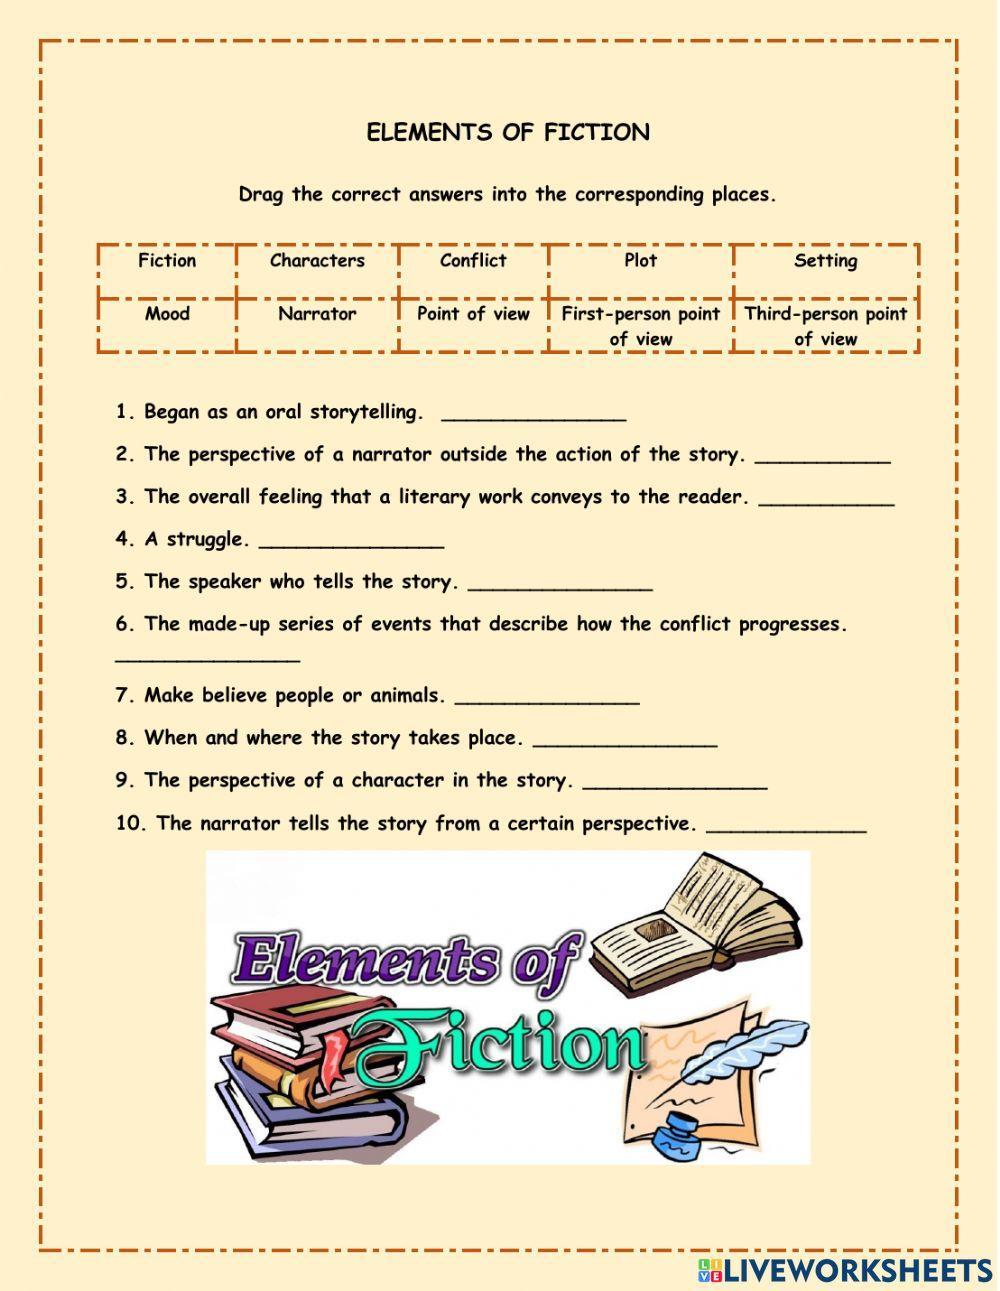 Elements of fiction